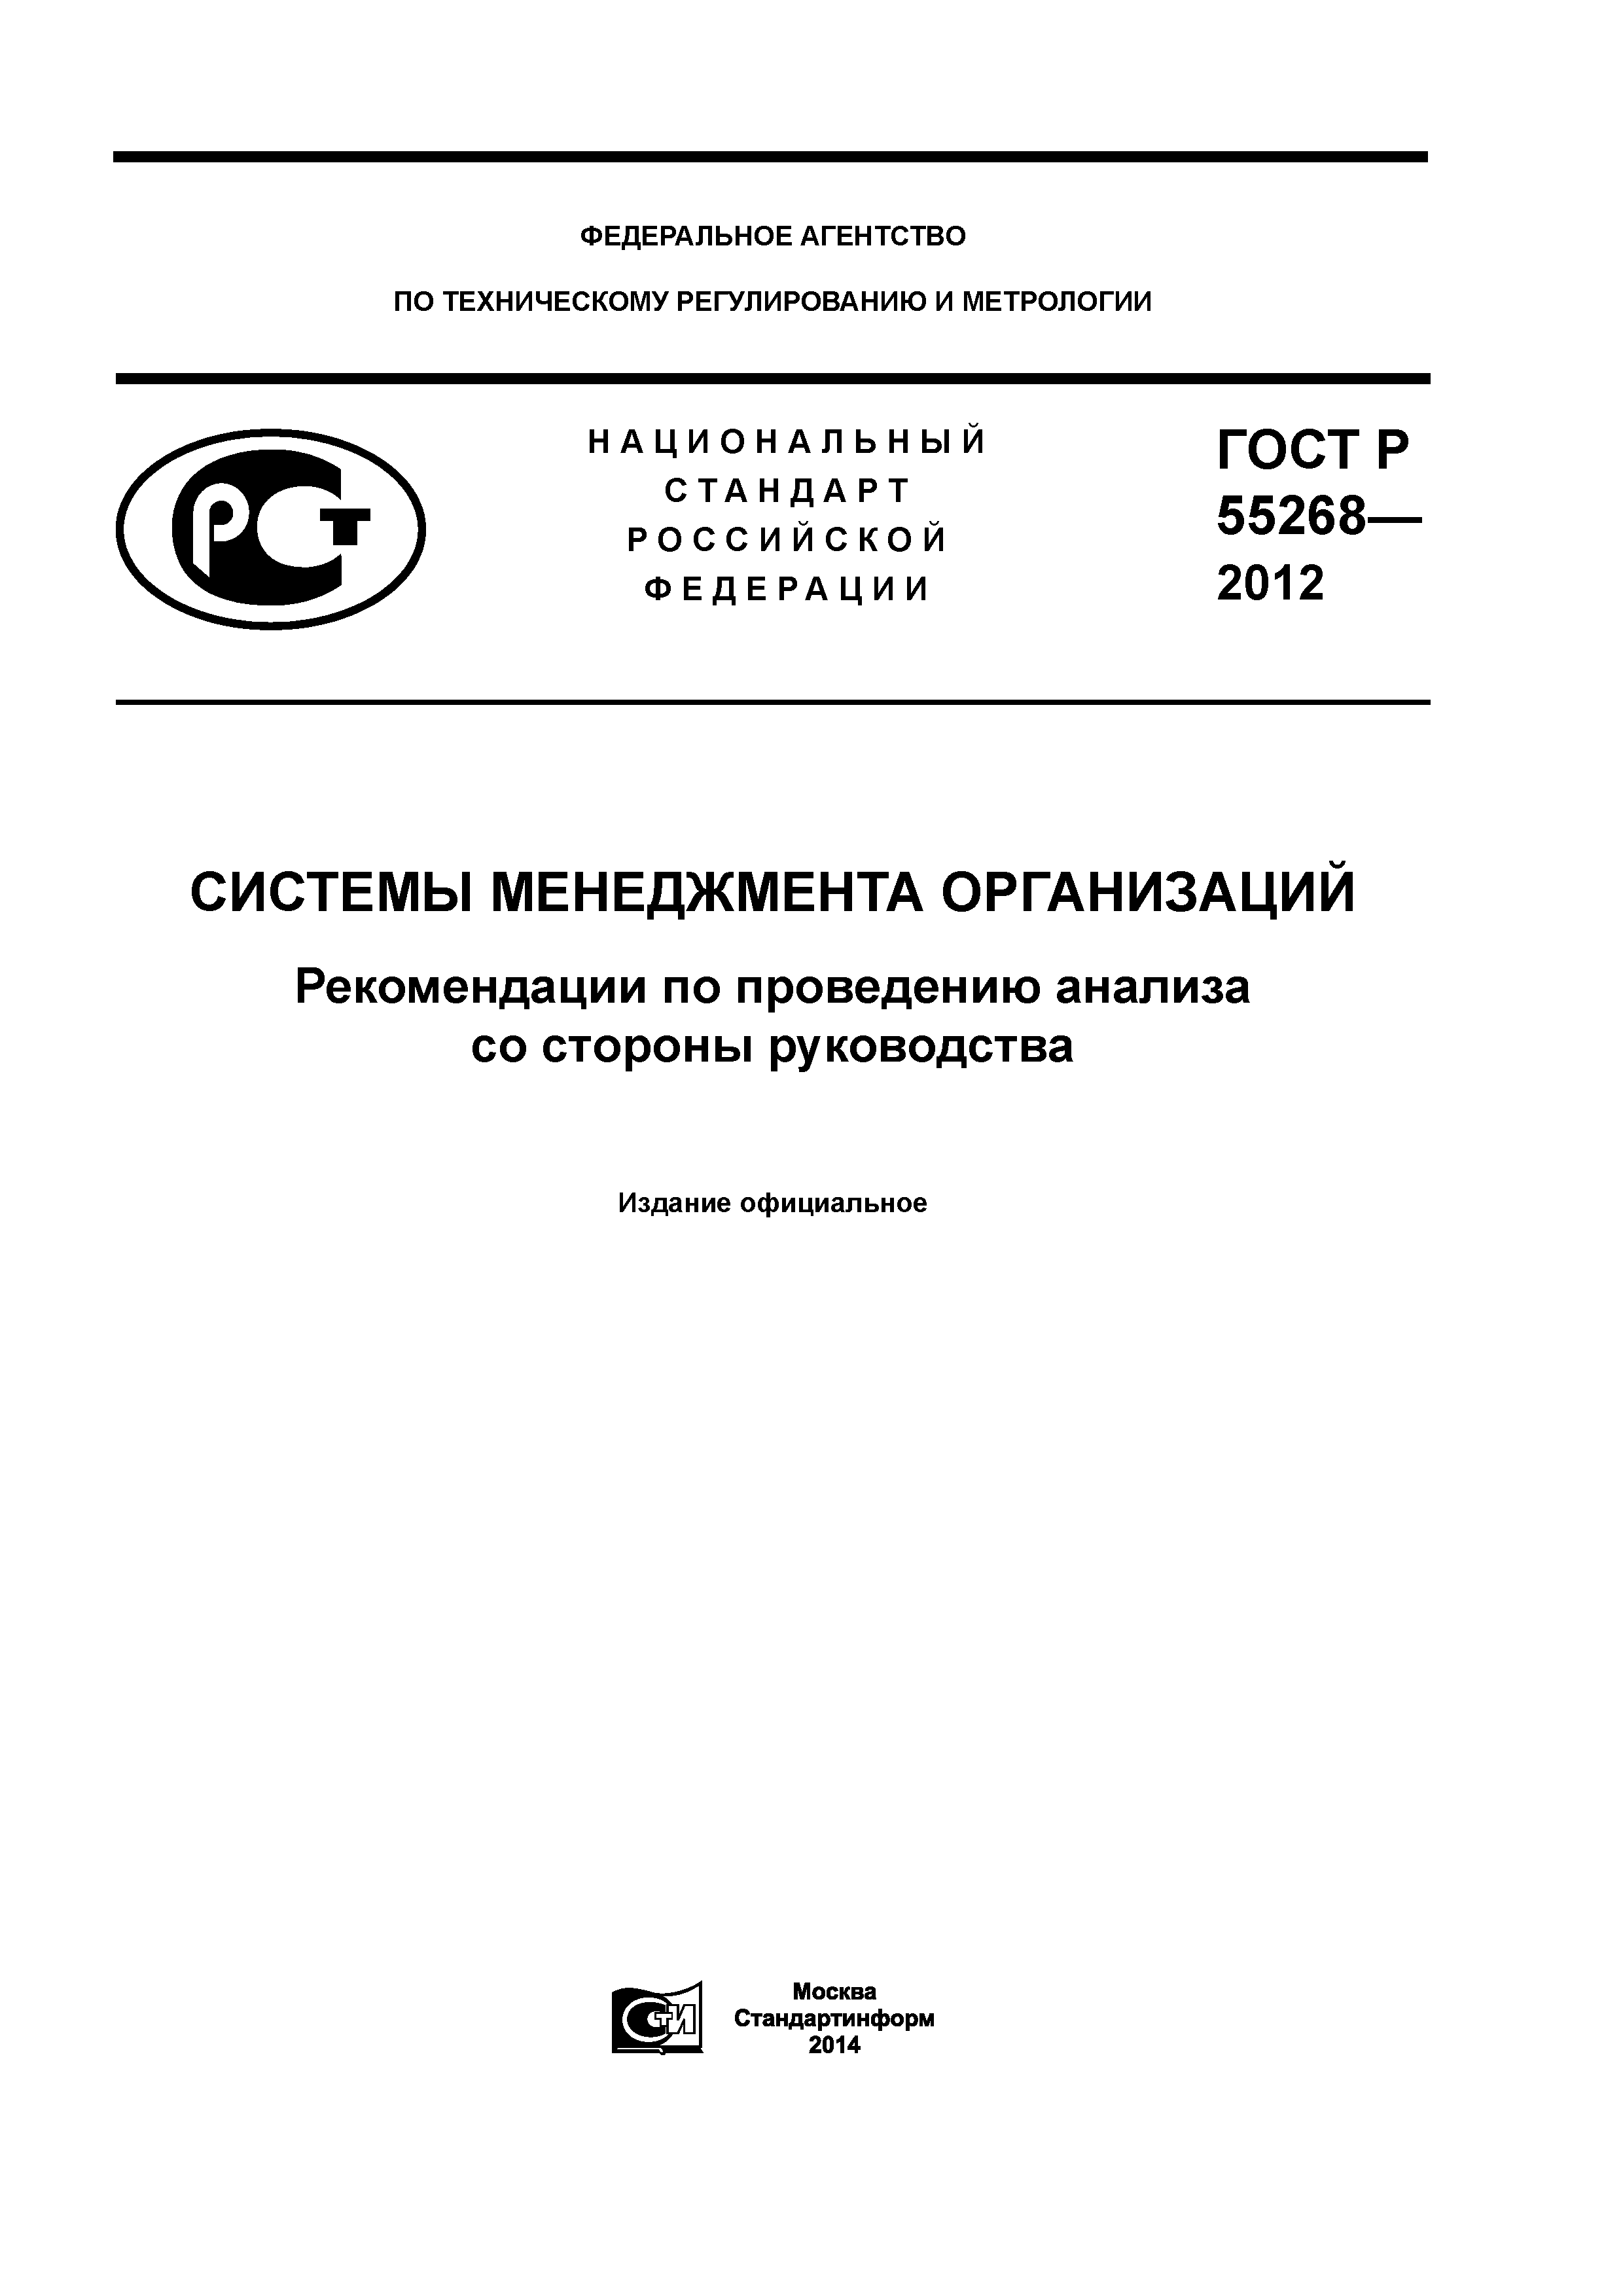 ГОСТ Р 55268-2012